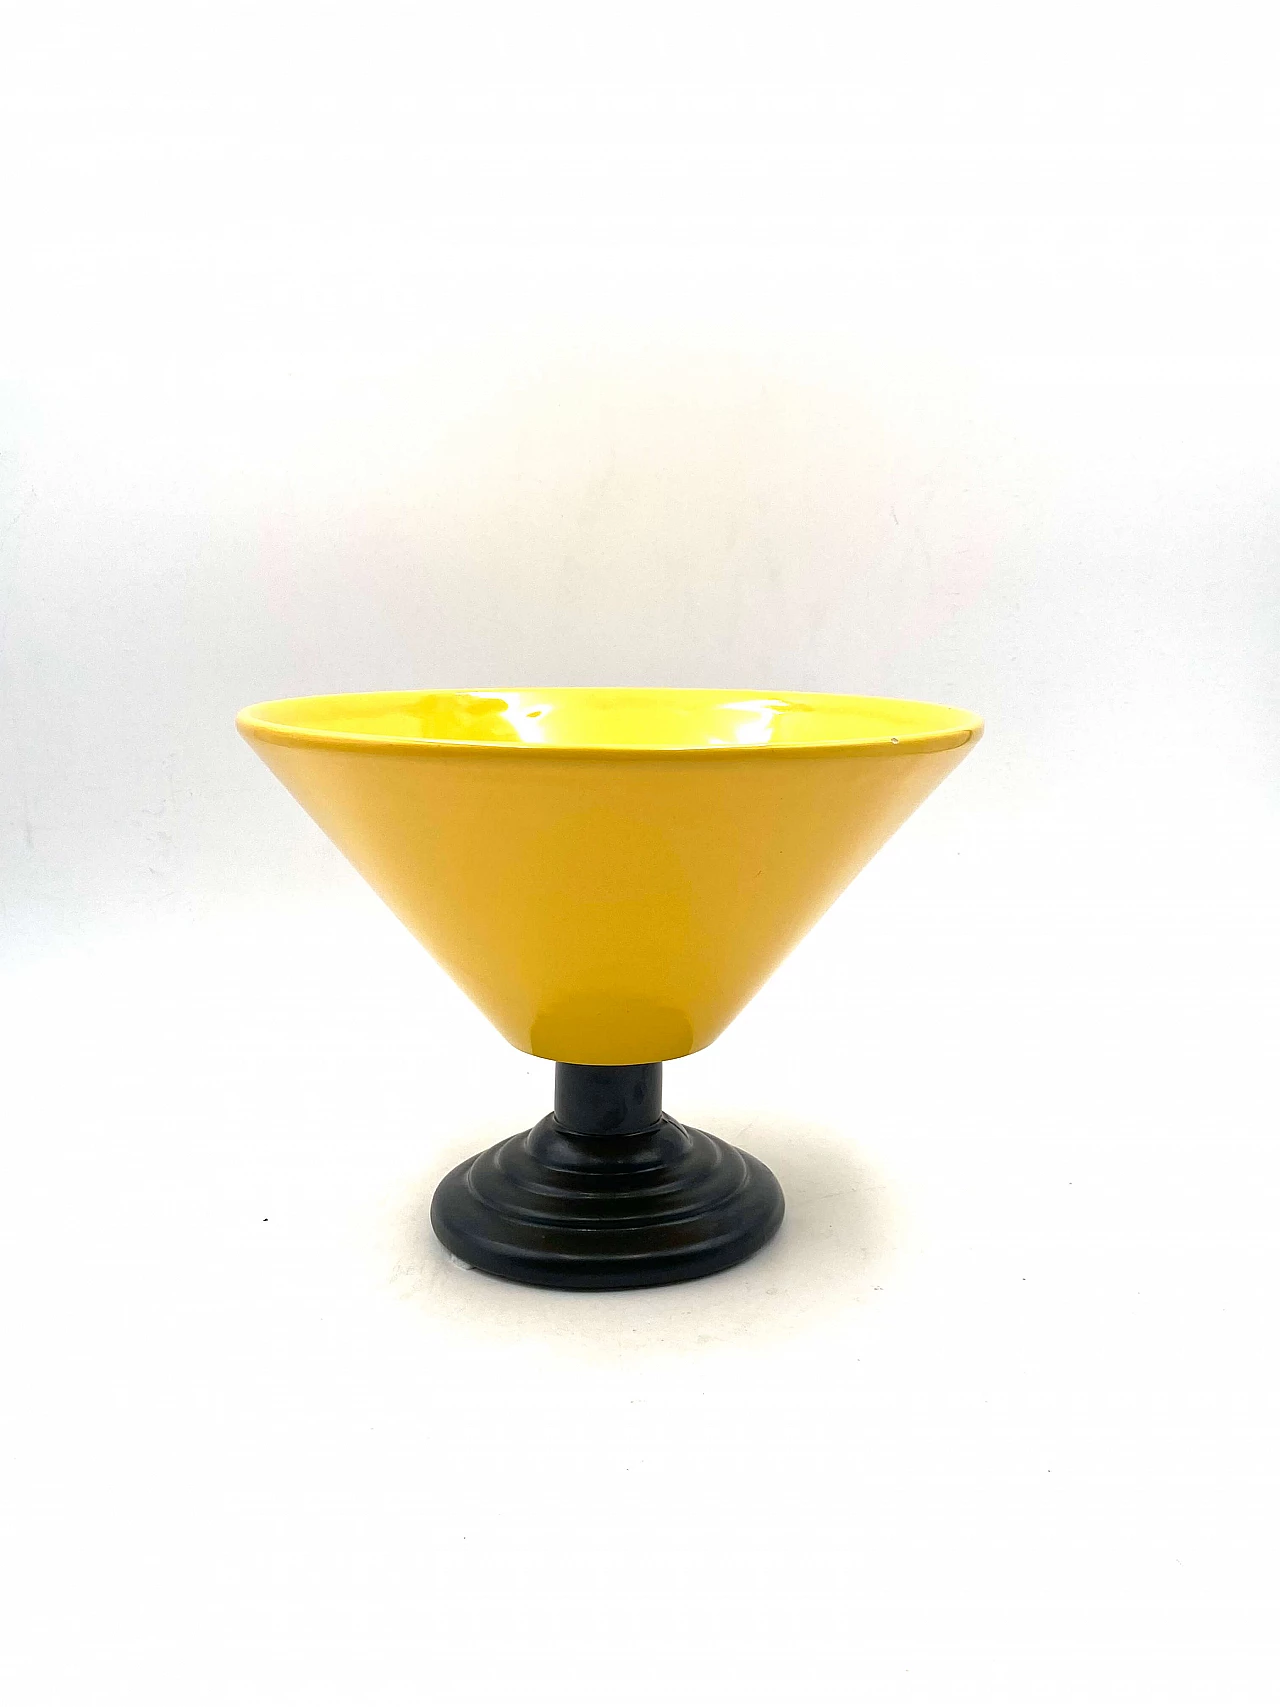 Postmodern yellow vase in Memphis style, 1980s 1380453